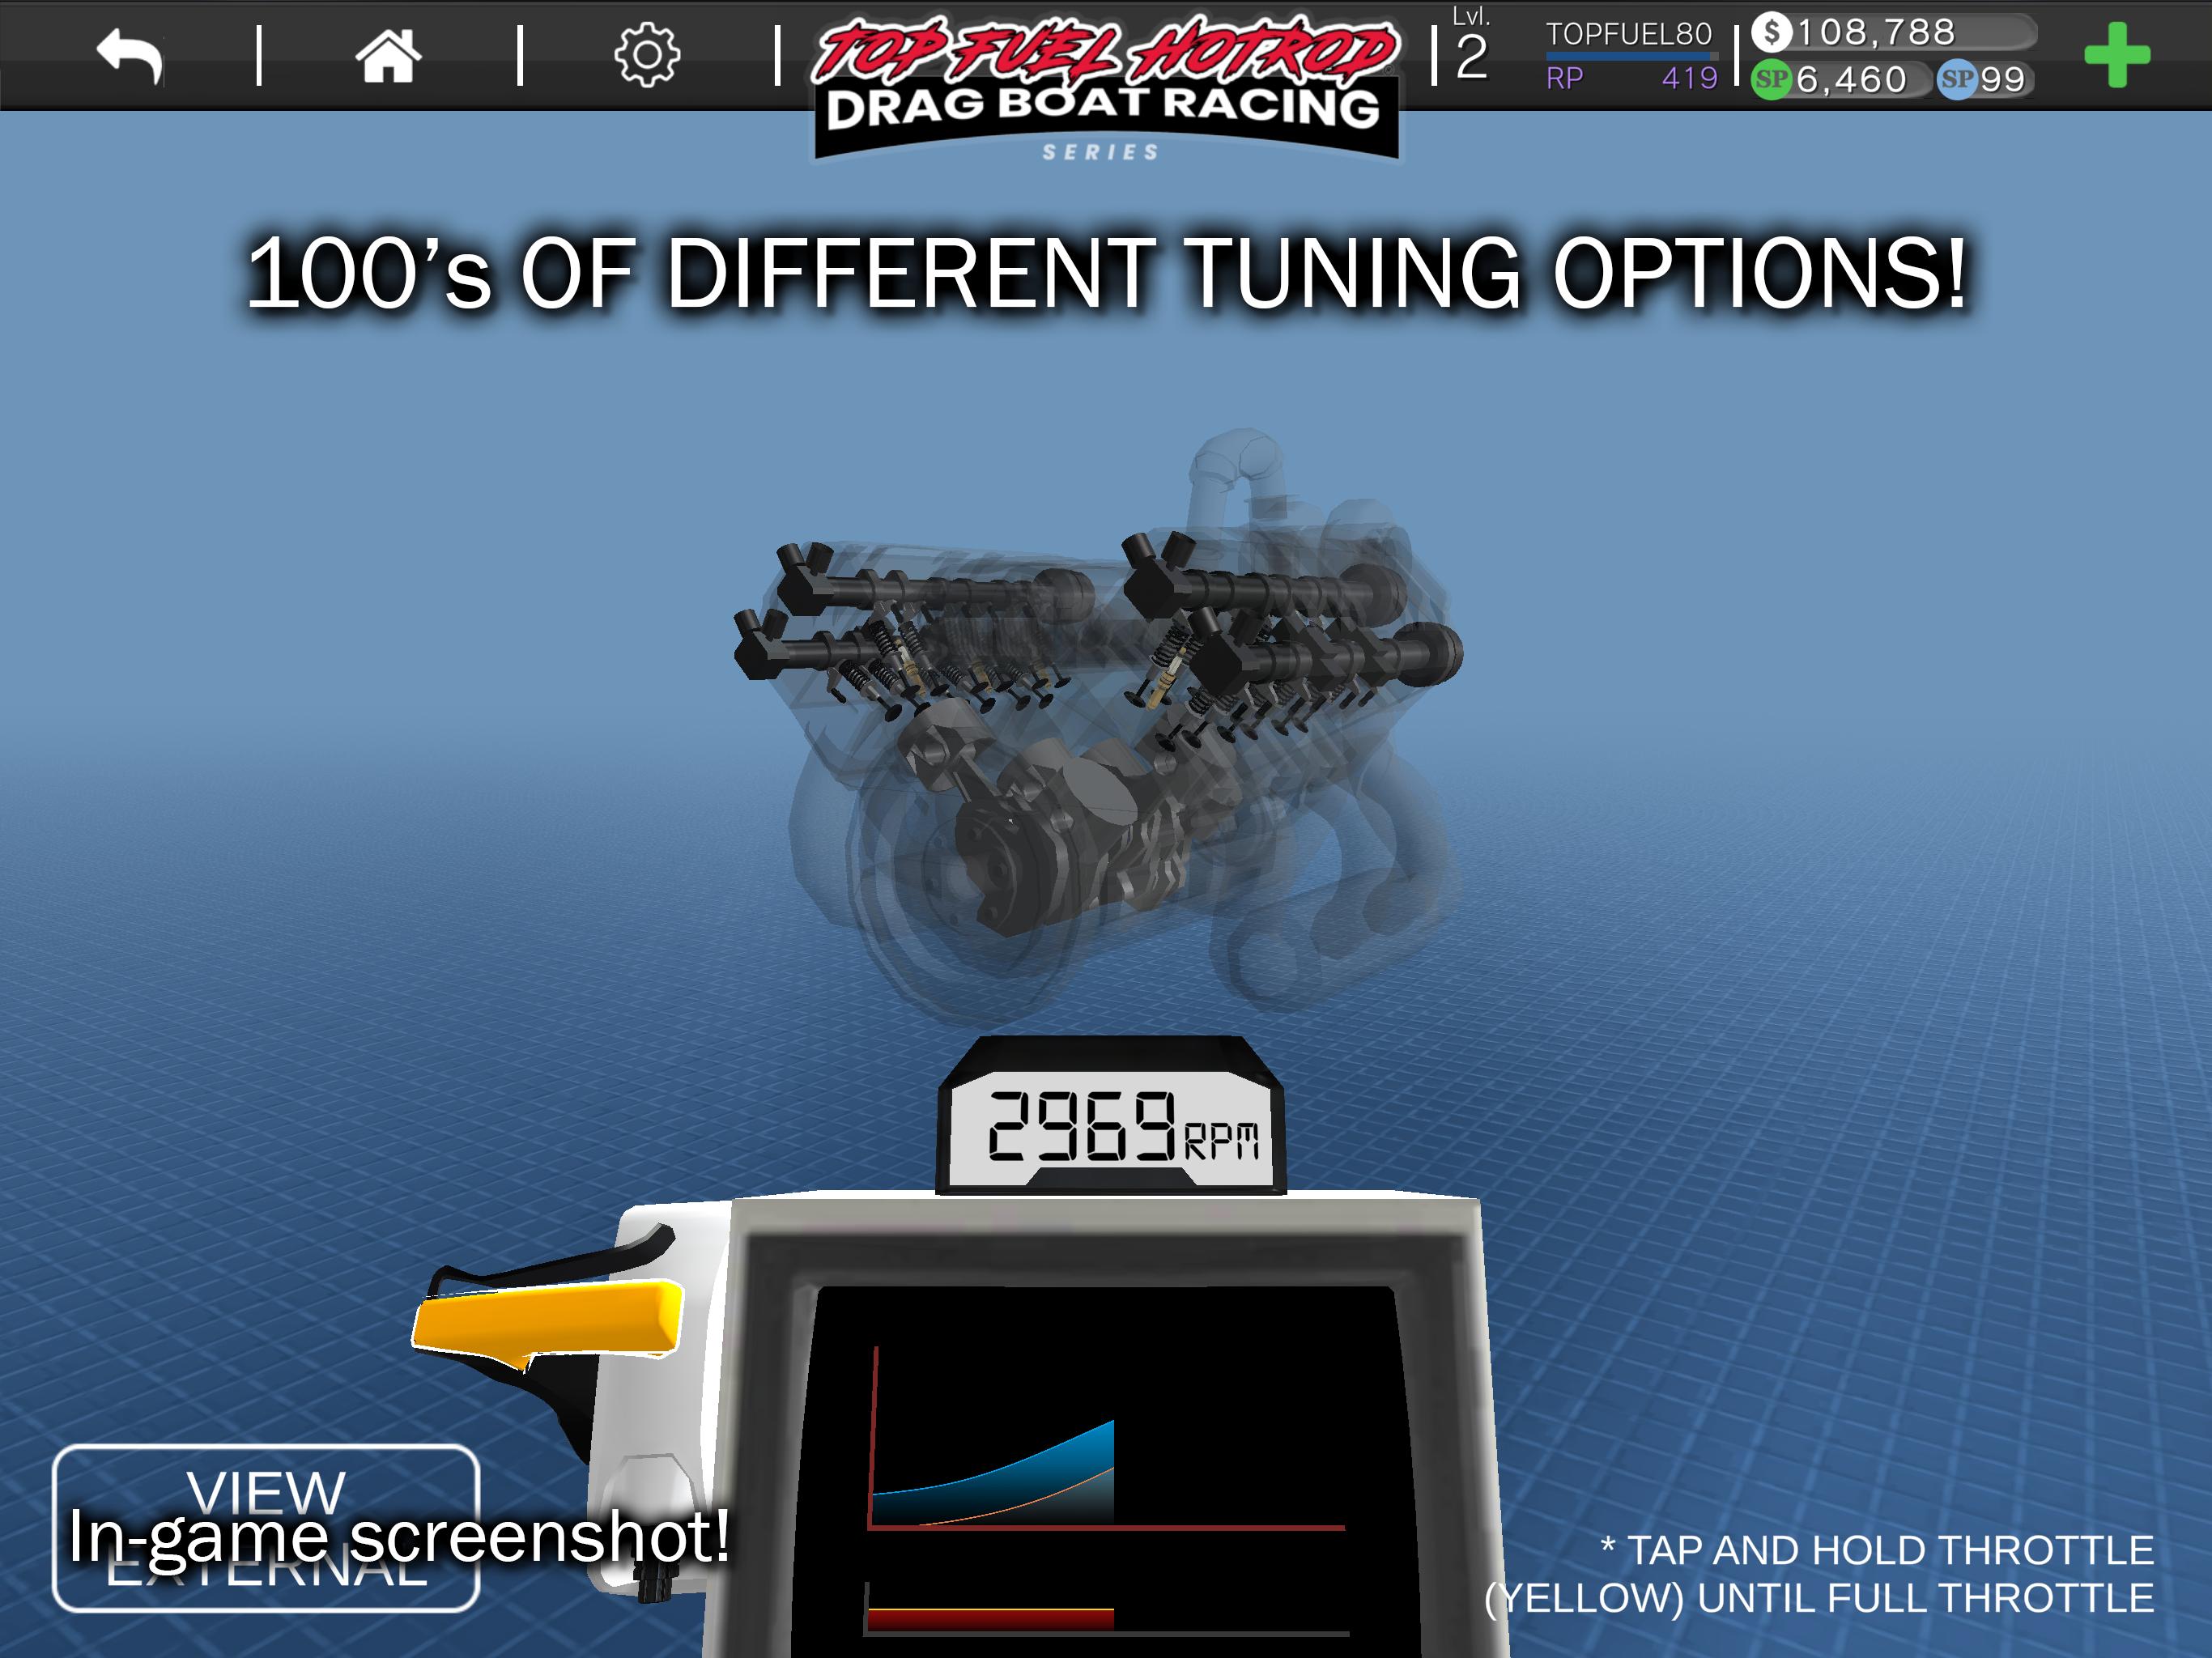 Top Fuel Hot Rod - Drag Boat Speed Racing Game 1.16 Screenshot 16